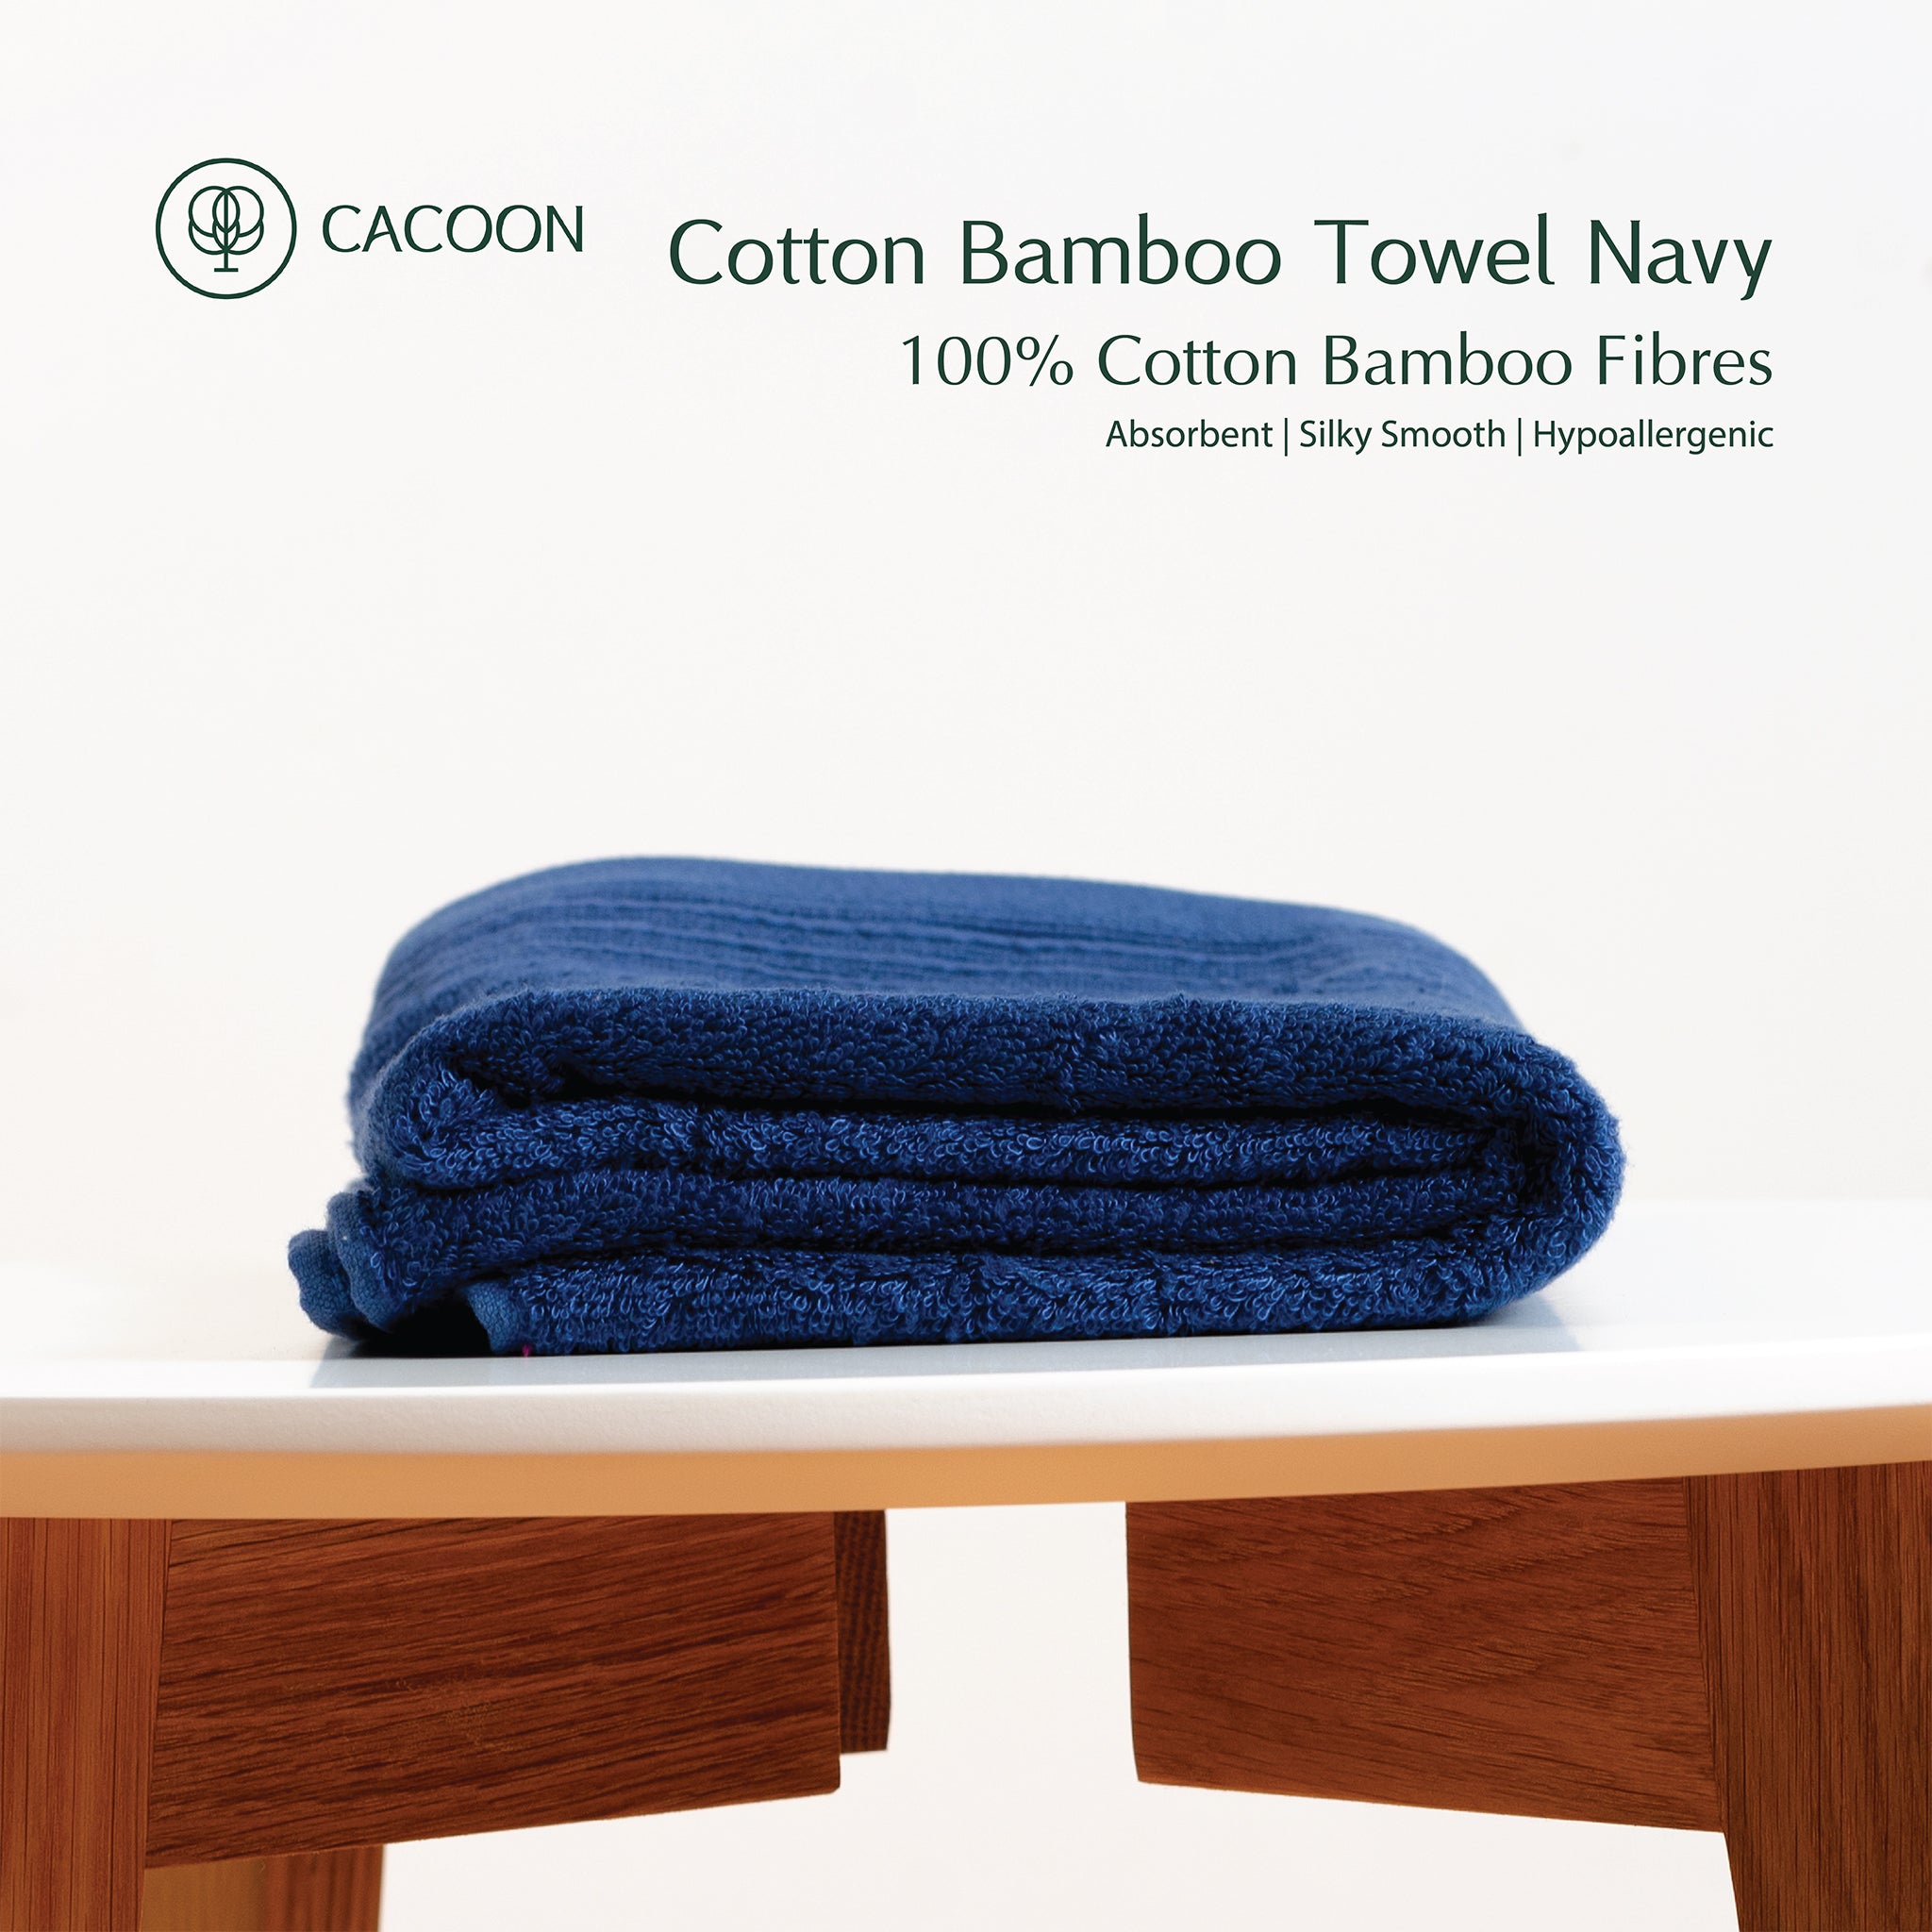 Cotton Bamboo Towel Navy